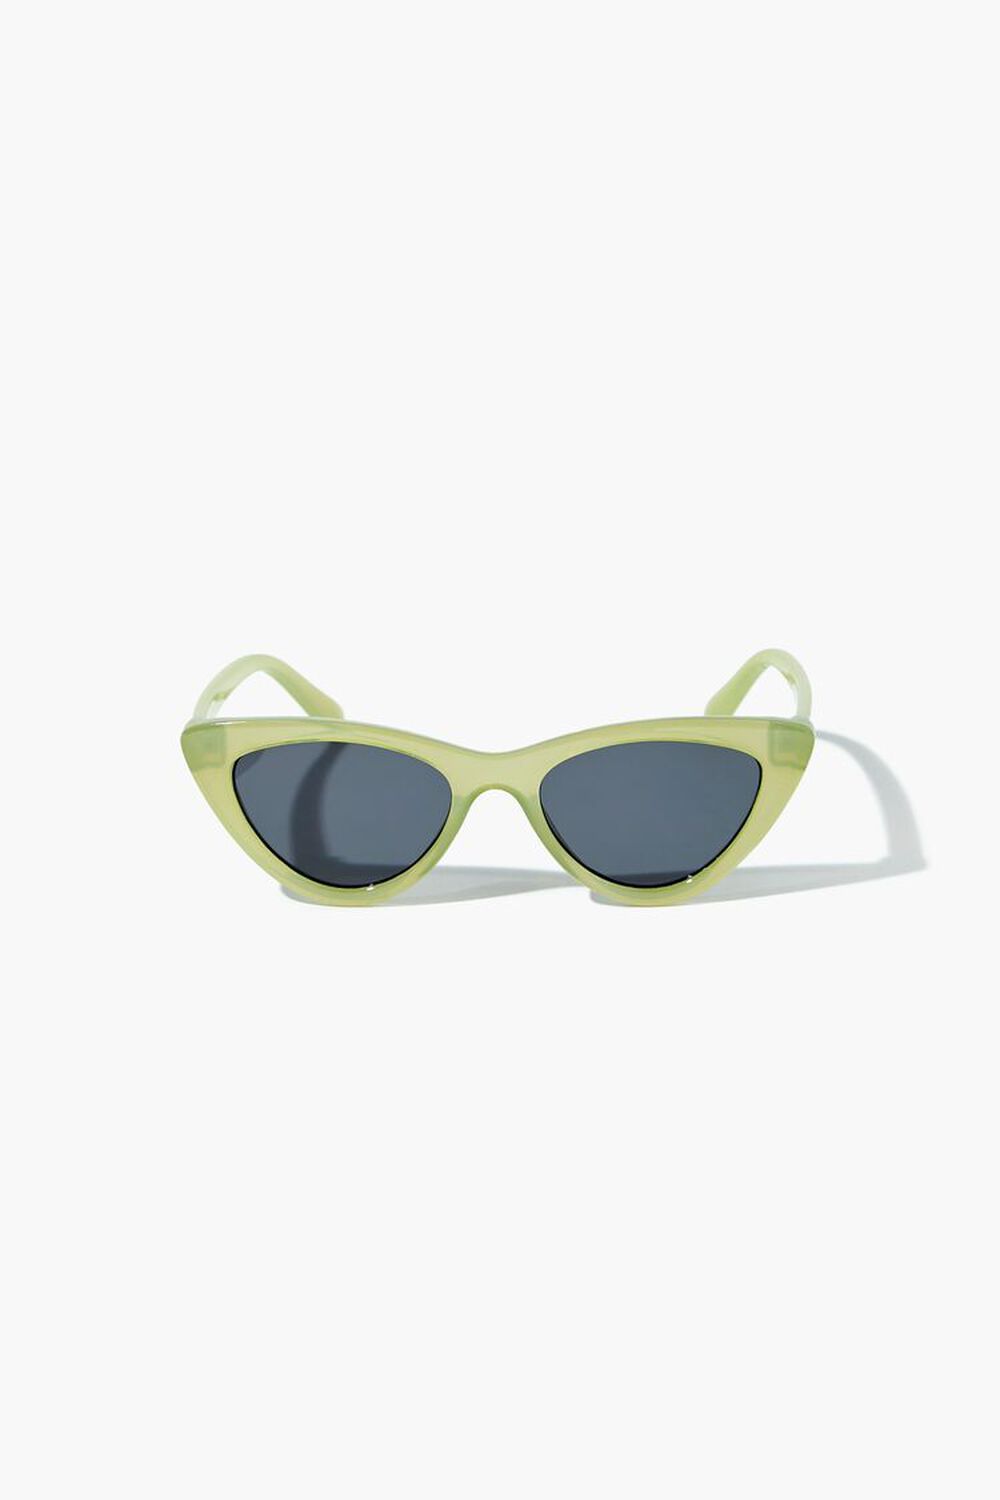 LIME/BLACK Tinted Cat-Eye Sunglasses, image 1